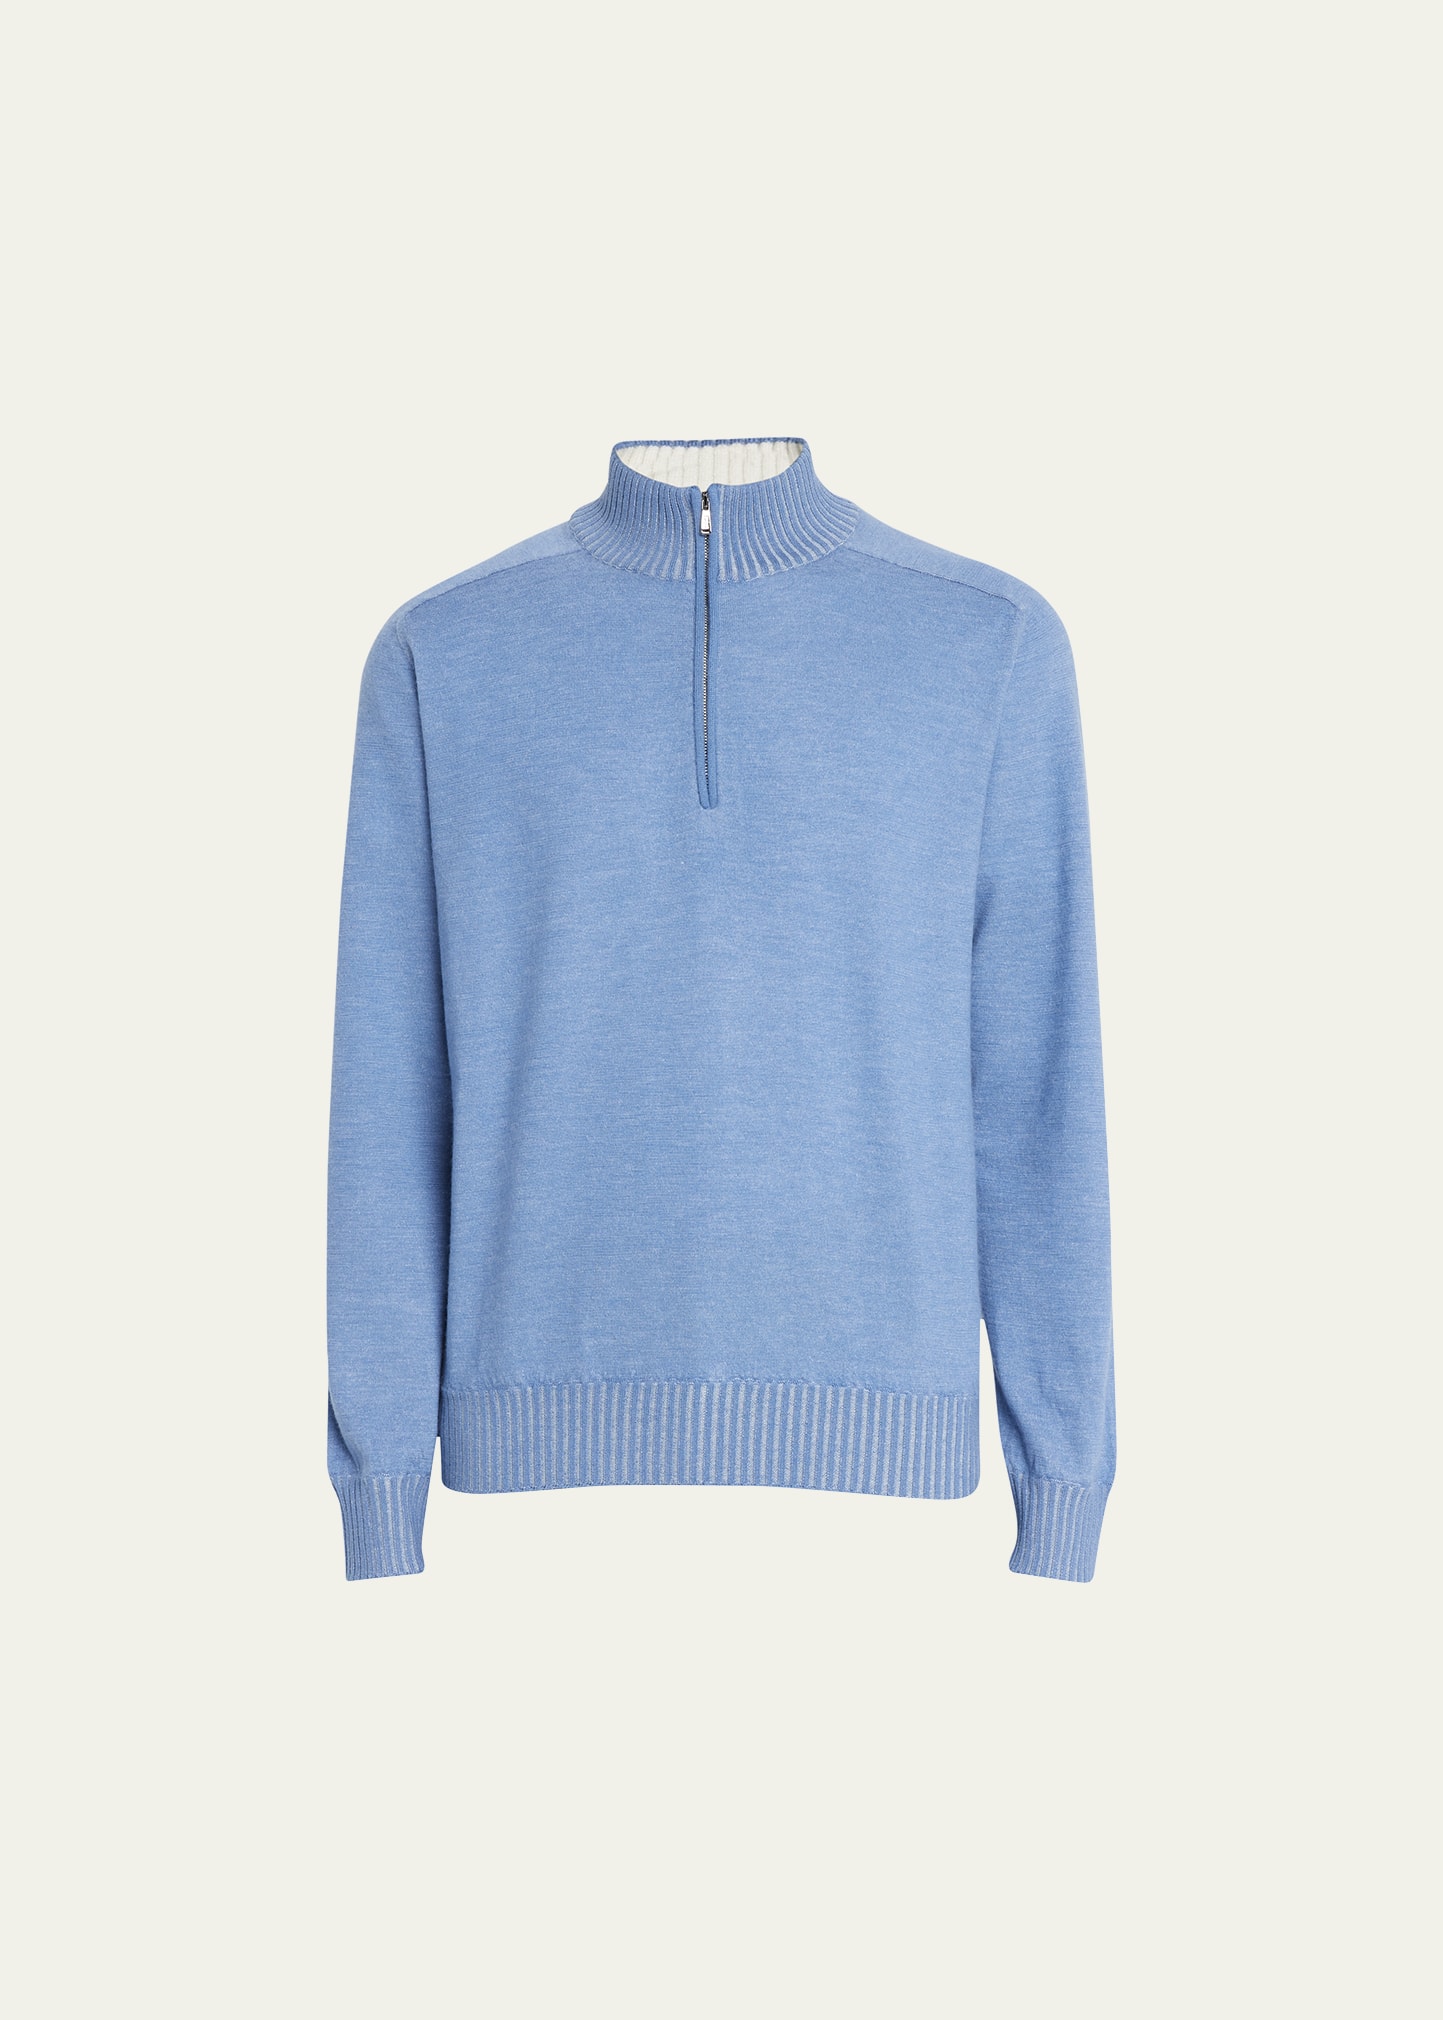 Fioroni Men's Cashmere Half-Zip Sweater